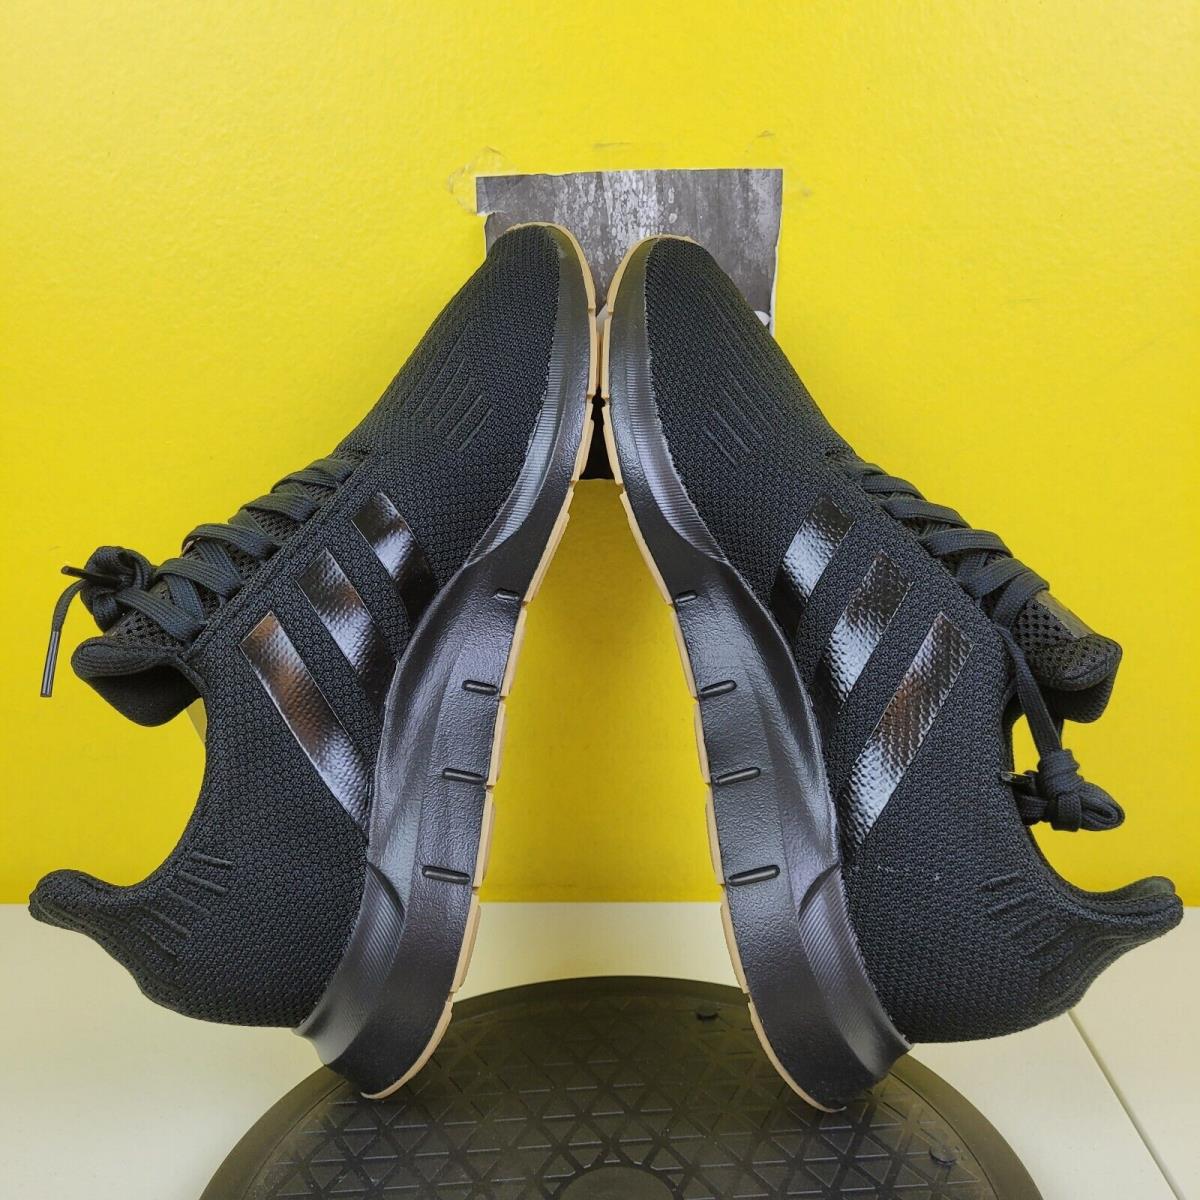 Adidas shoes Swift Run - Black 2